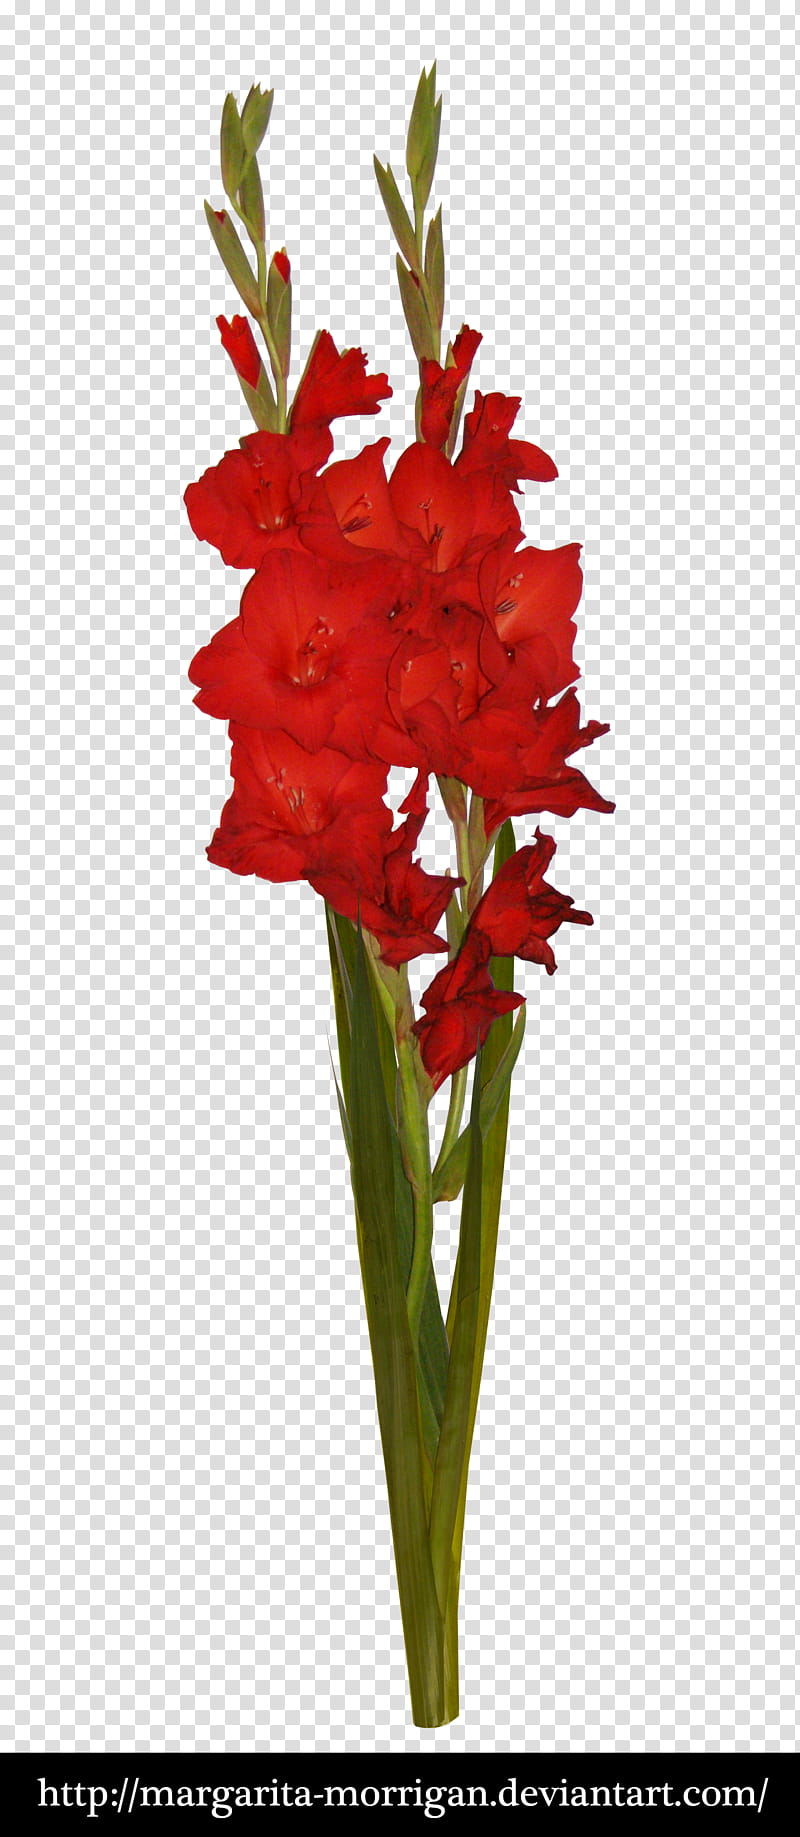 Red gladiolus, red petaled flower art transparent background PNG clipart